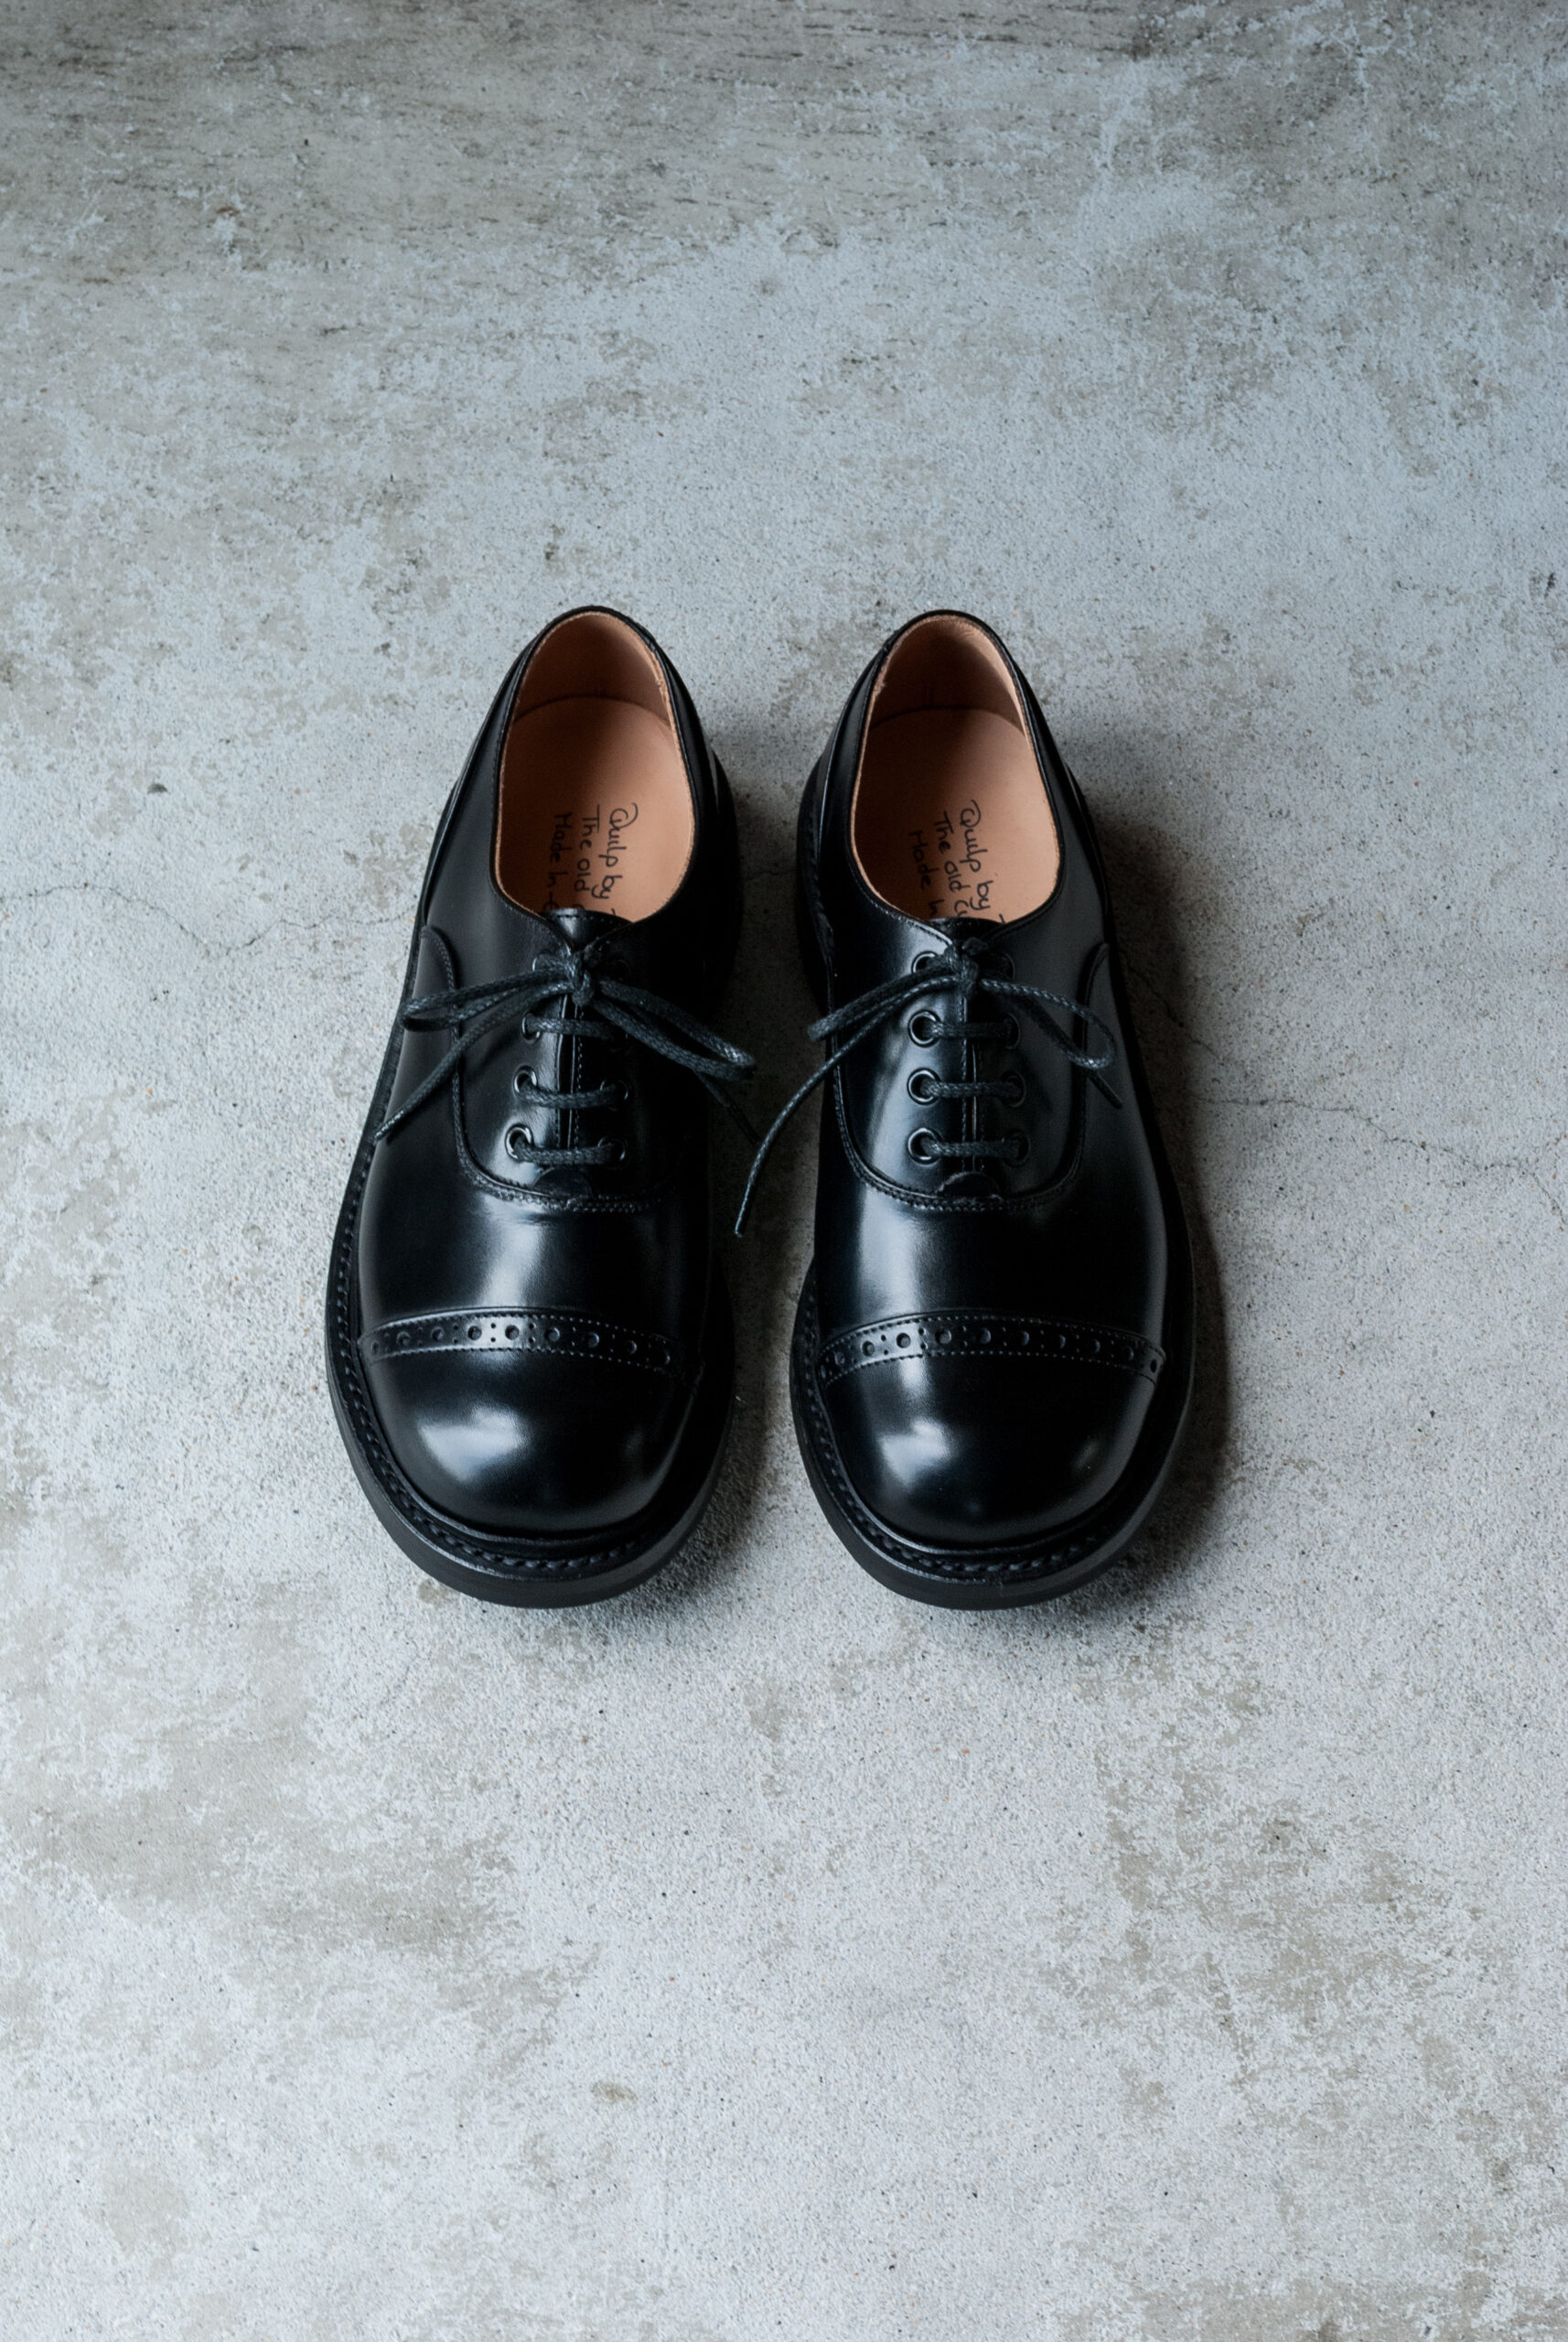 QUILP by Trickers M7401 Oxford Shoe Black Box Calf | kado〔カド ...